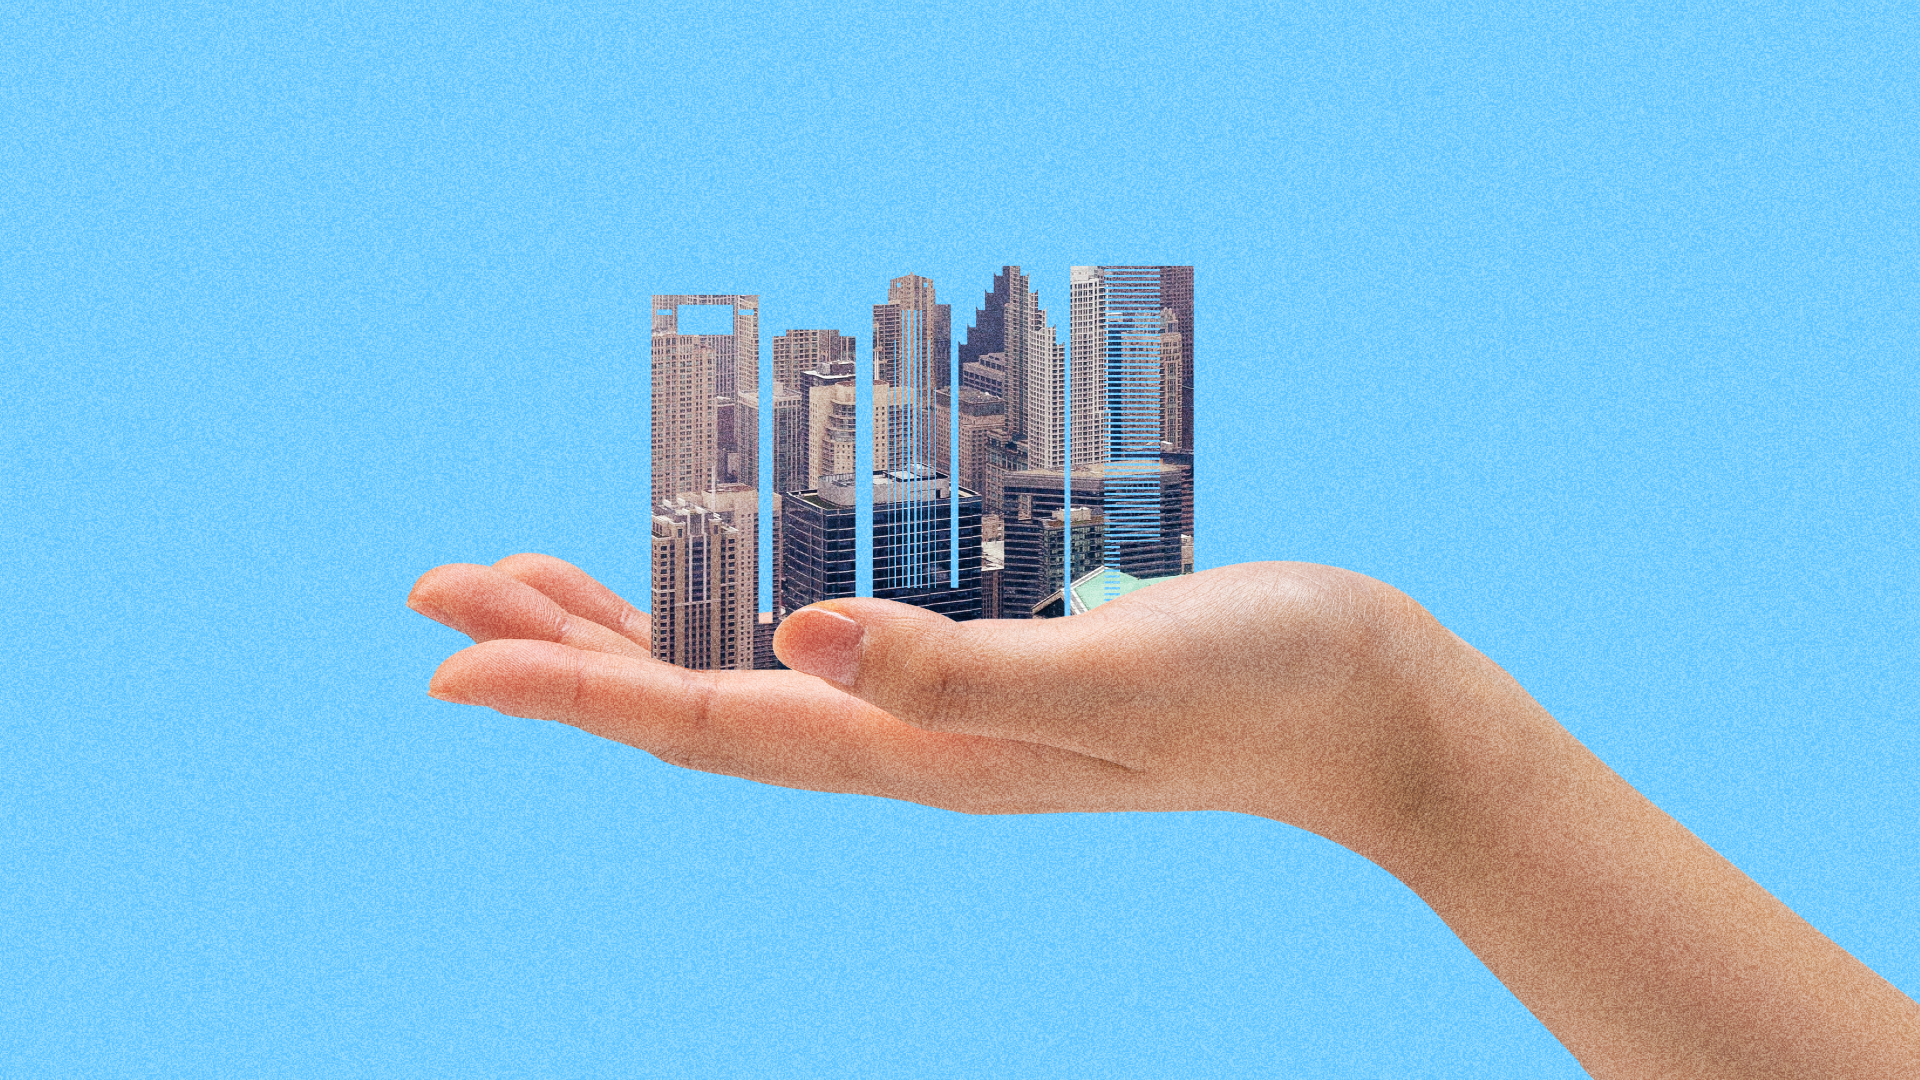 hand holds up a city skyline